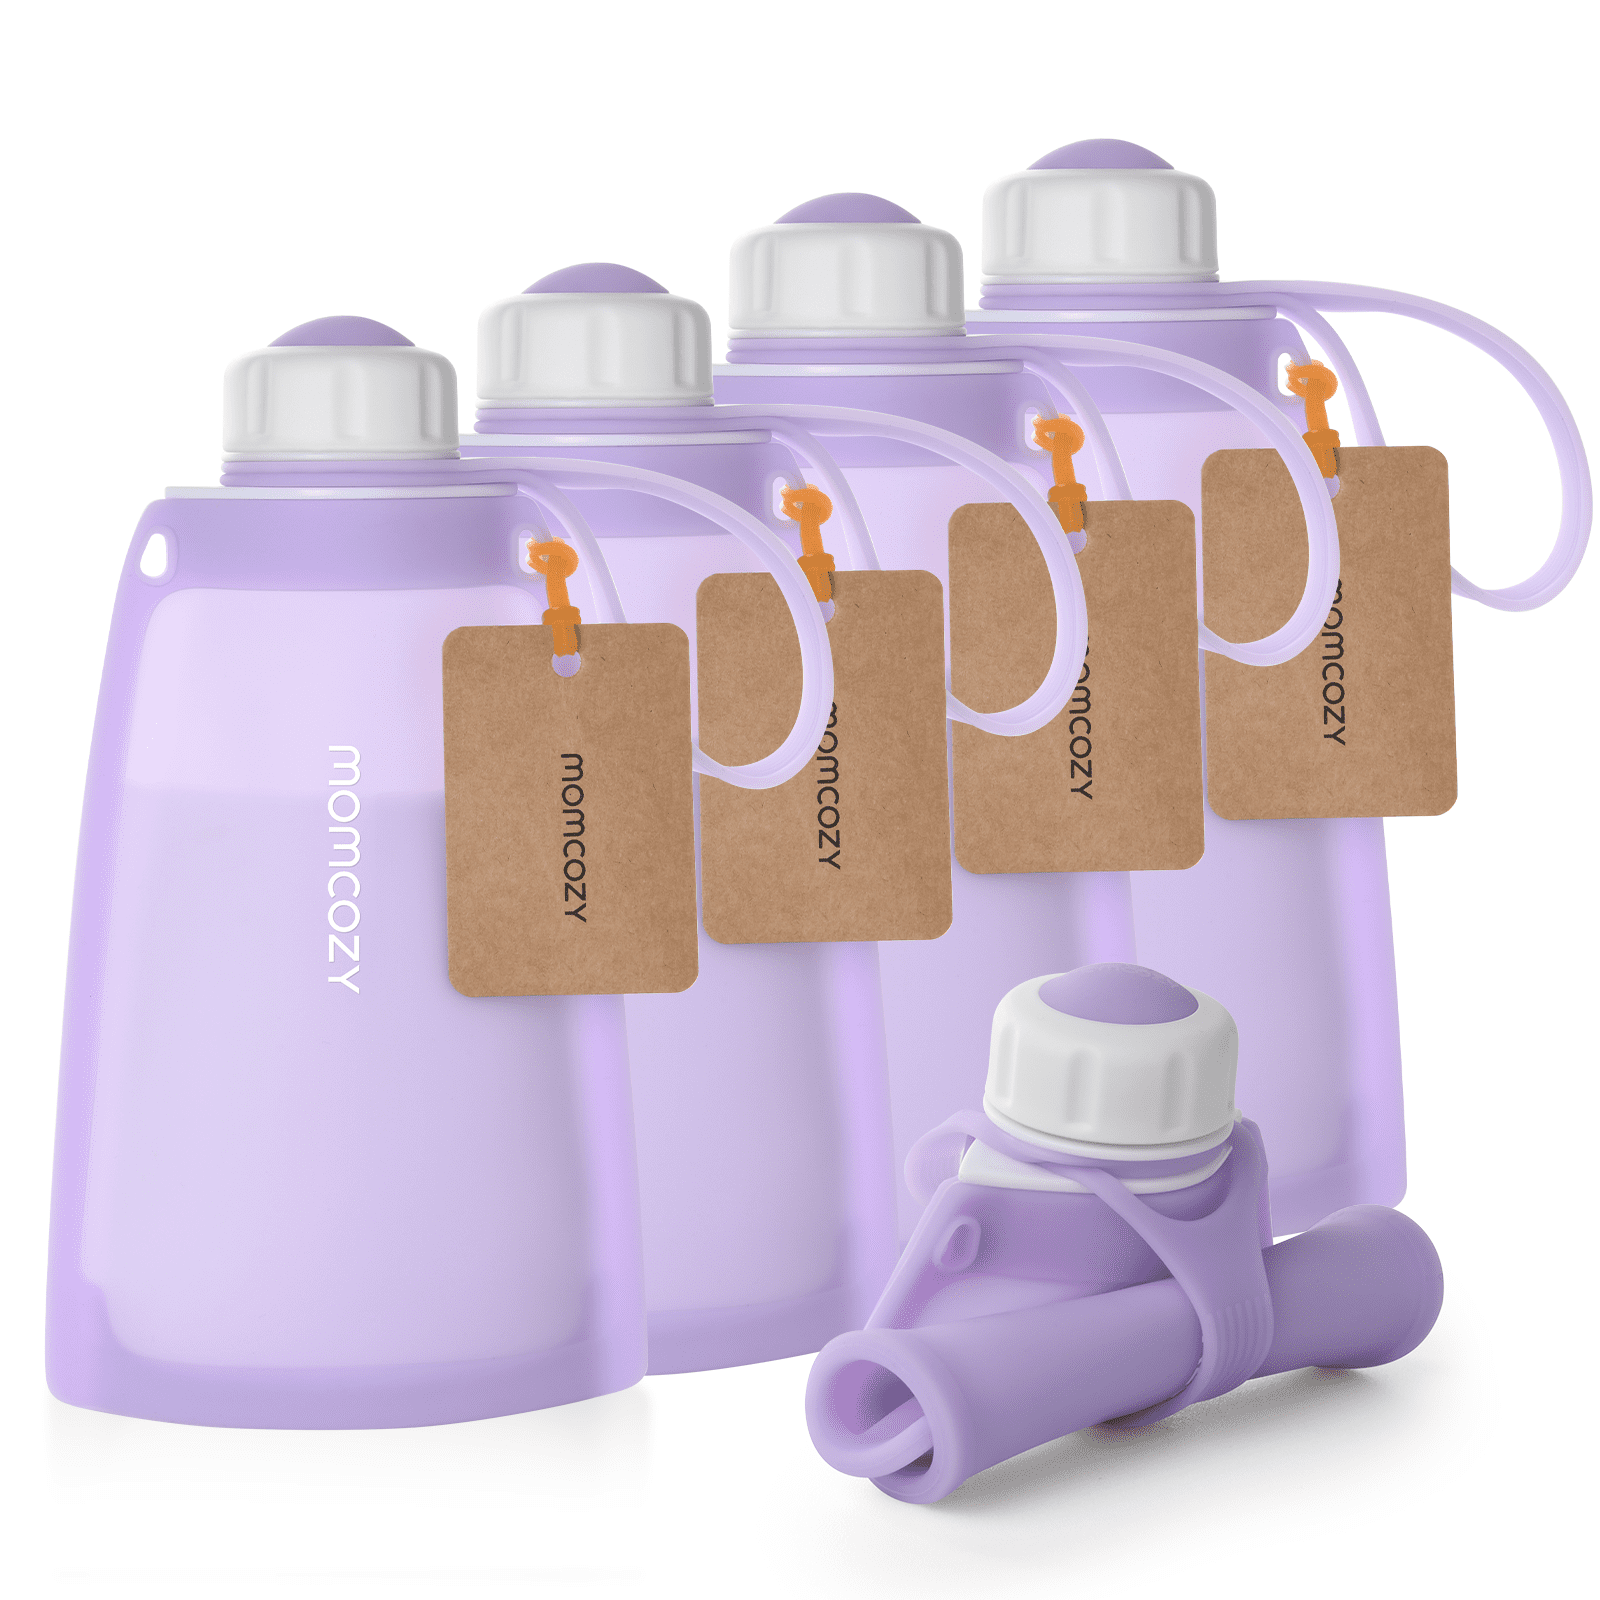 Momcozy Breastmilk Storage Bags 50 Ct, Disposable Temp-Sensing Milk Freezer  Bags 6oz/180ml